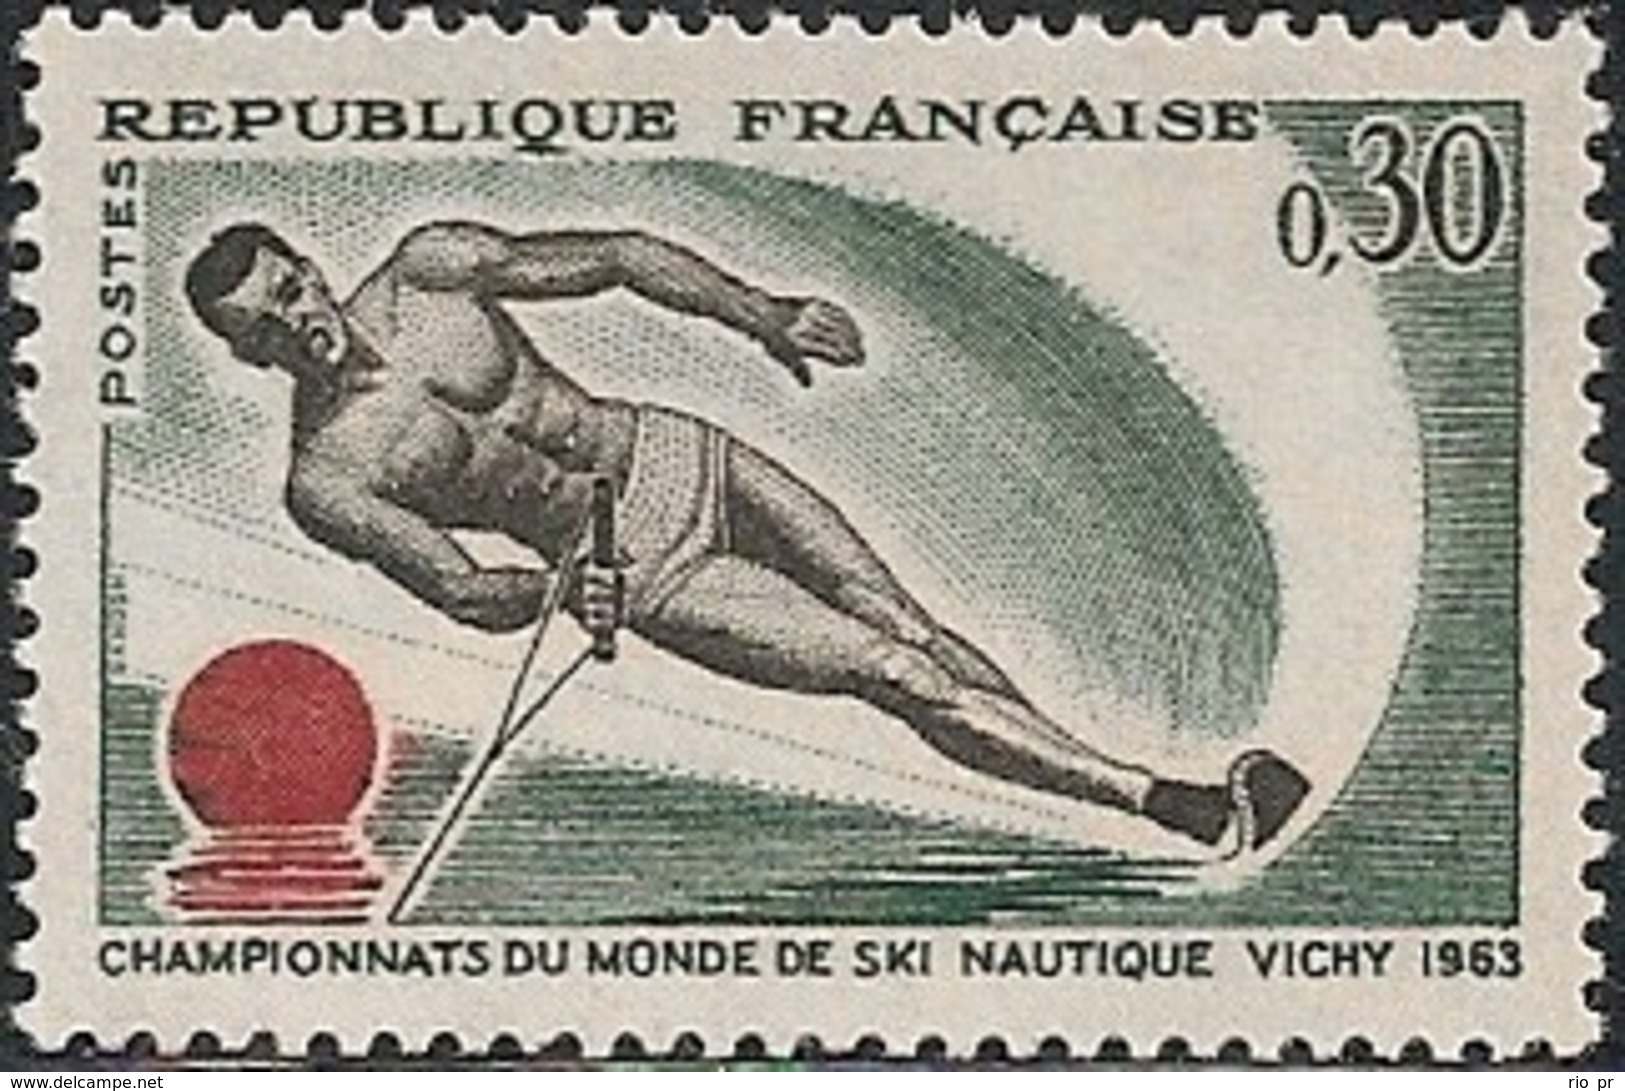 FRANCE - WORLD WATER-SKIING CHAMPIONSHIPS, VICHY 1963 - MNH - Sci Nautico